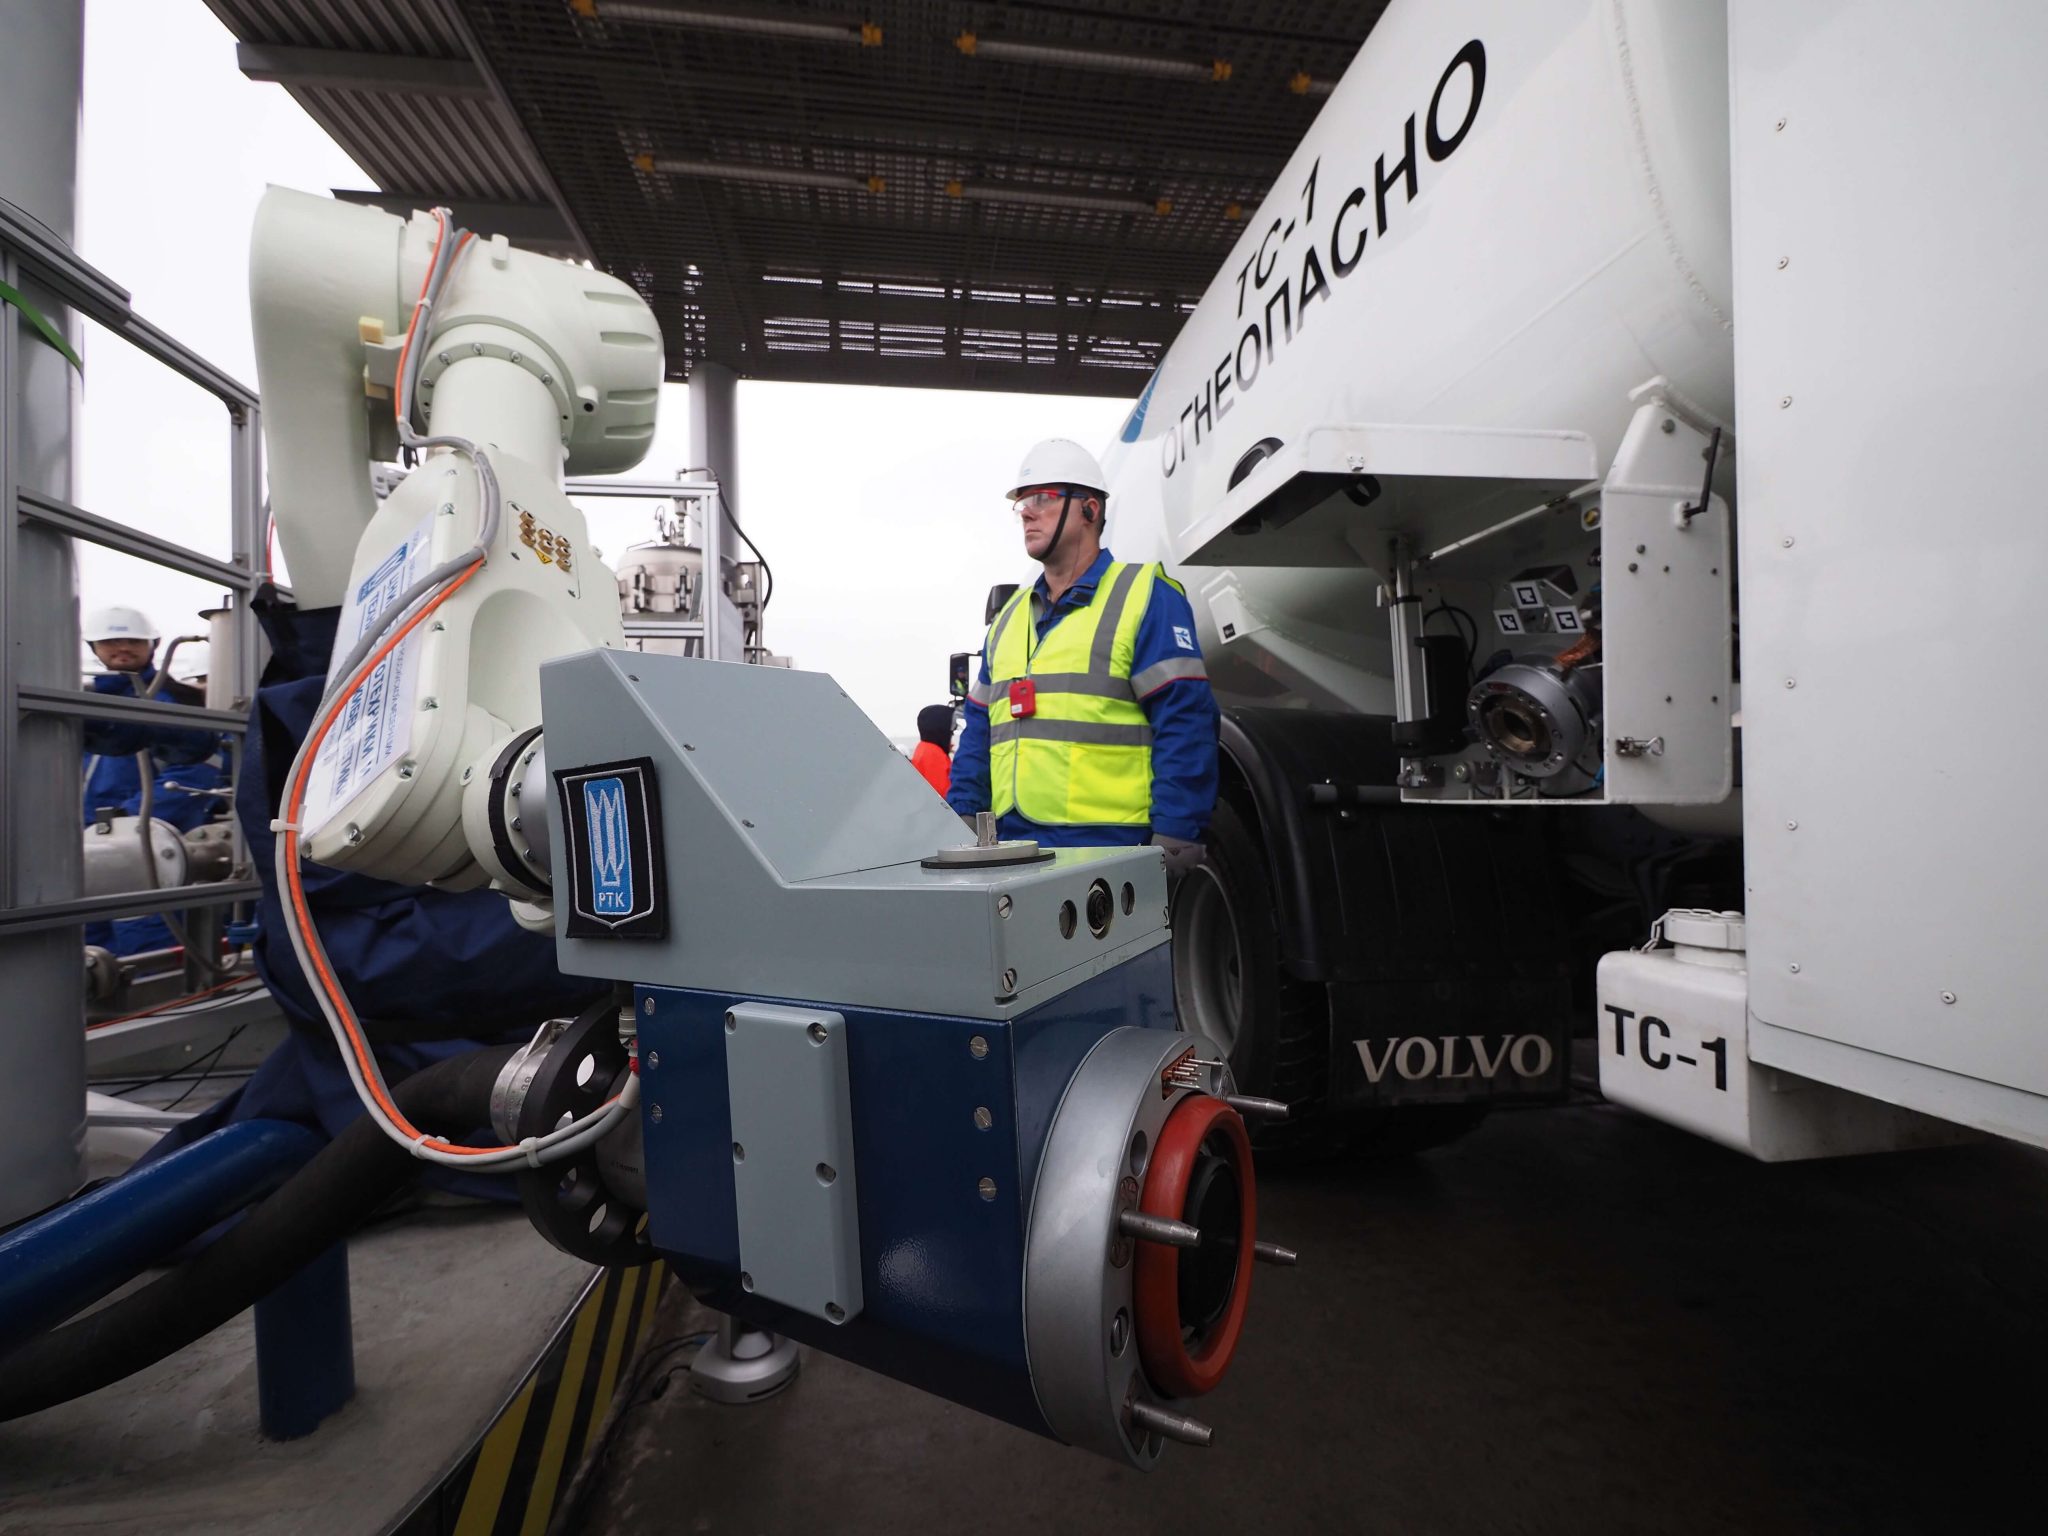 Gazprom Neft reveals concept of robotic fuel station